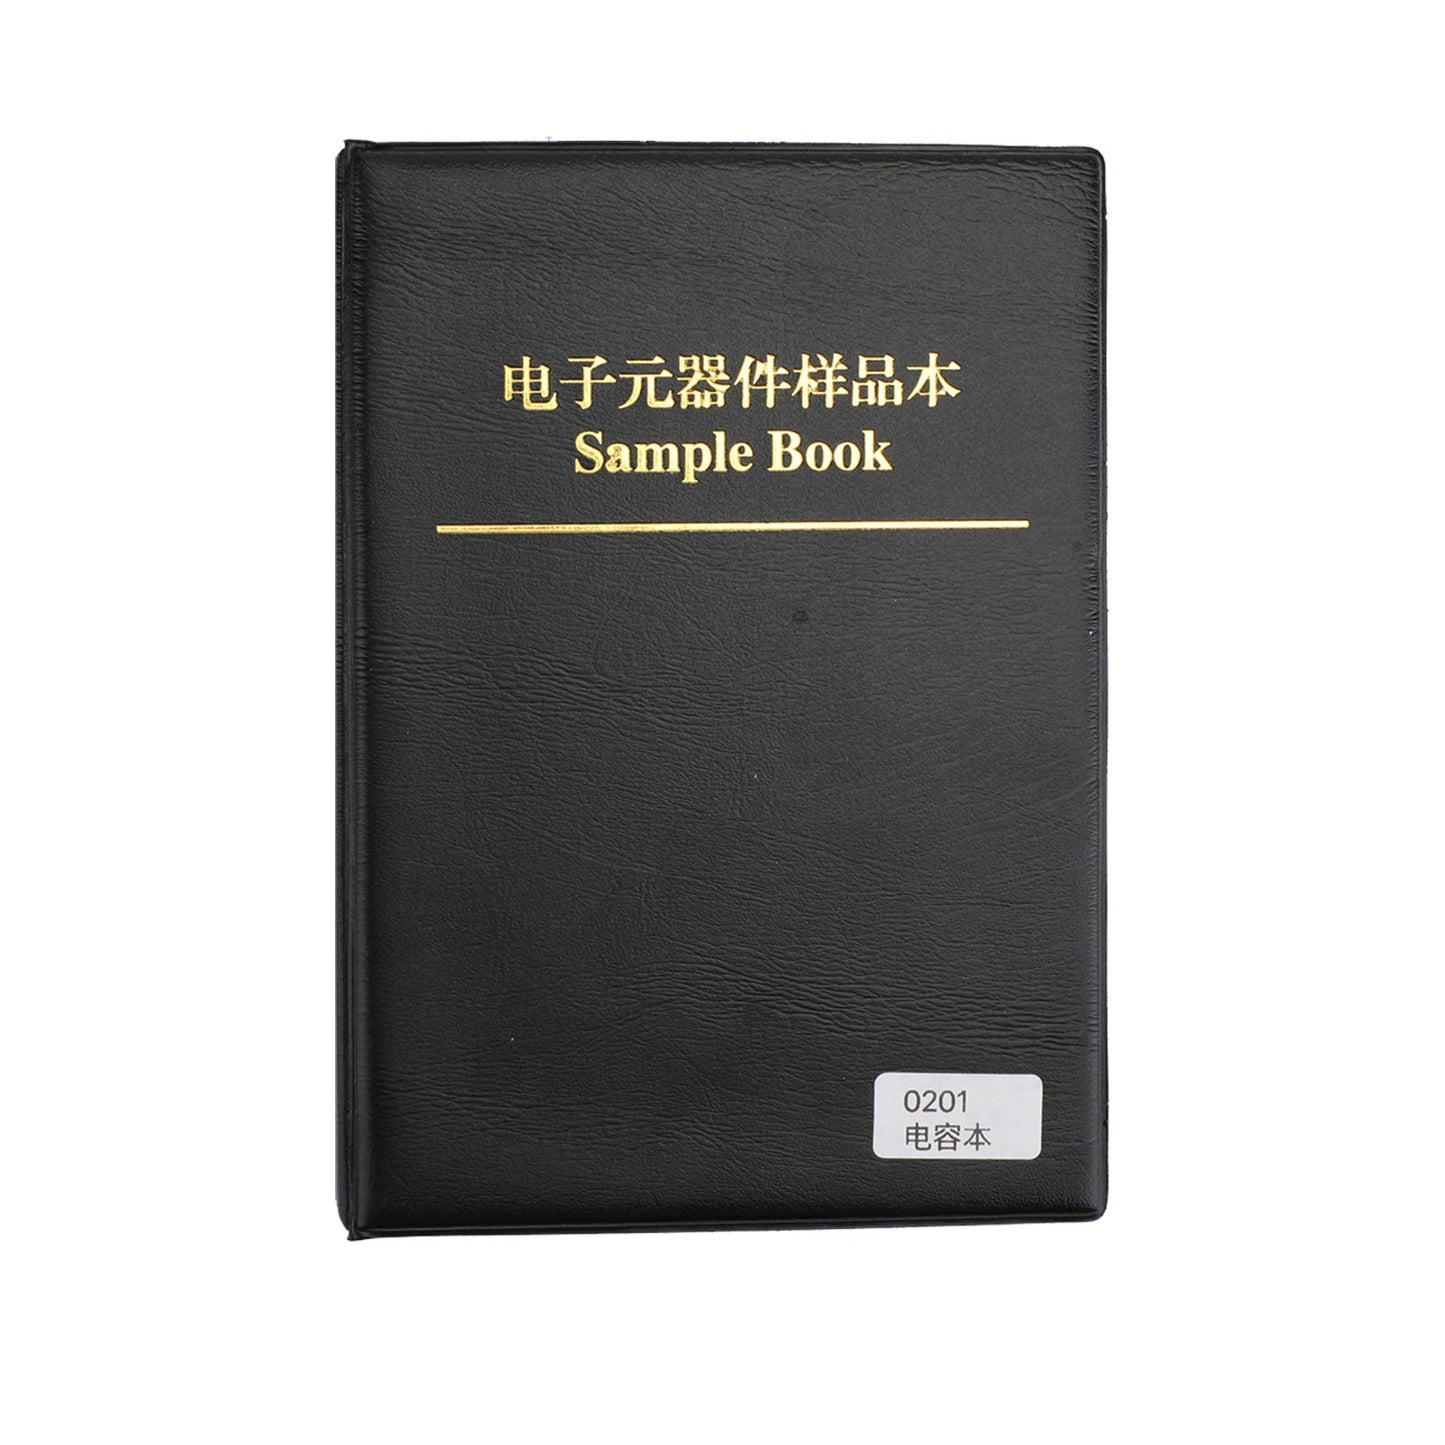 SMD0201 Capacitor sample book 51 values * 50pcs=2550pcs Capacitor kit SMD